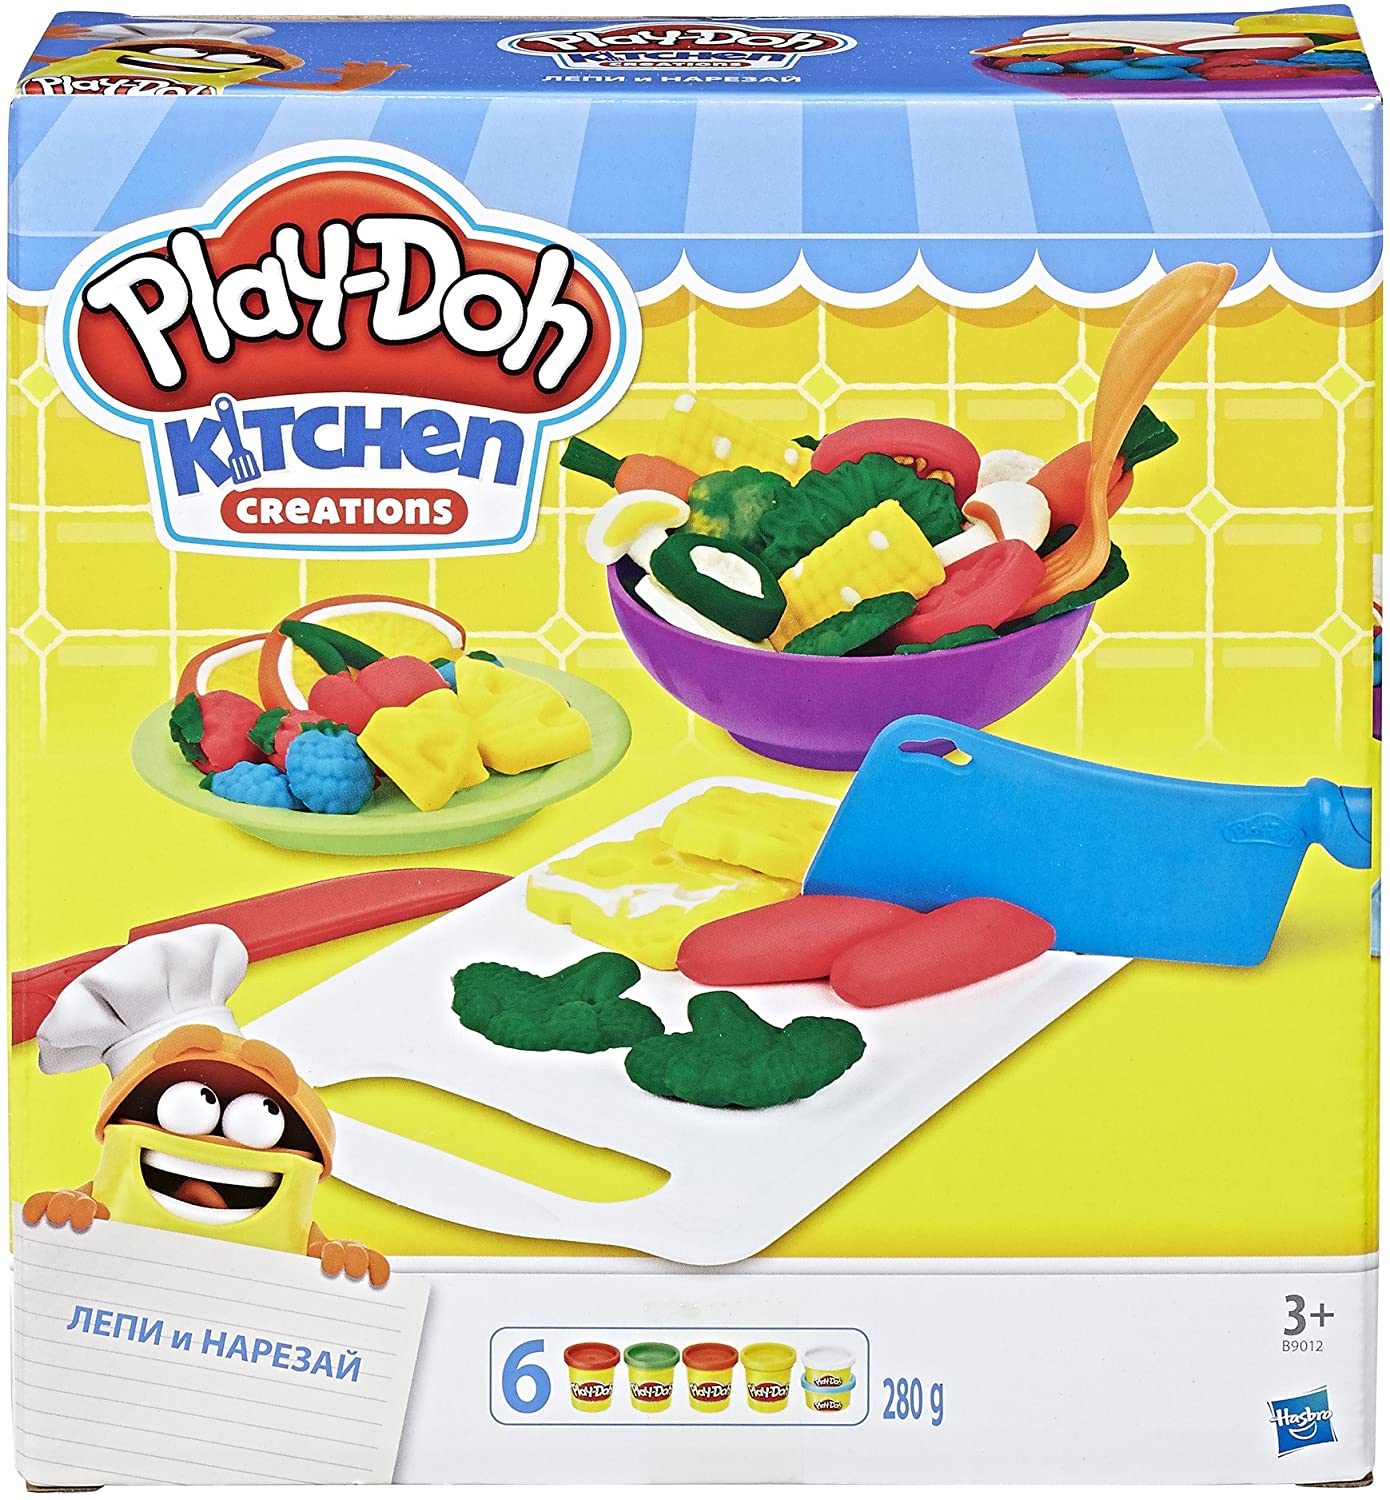 Best Play-Doh set ever!